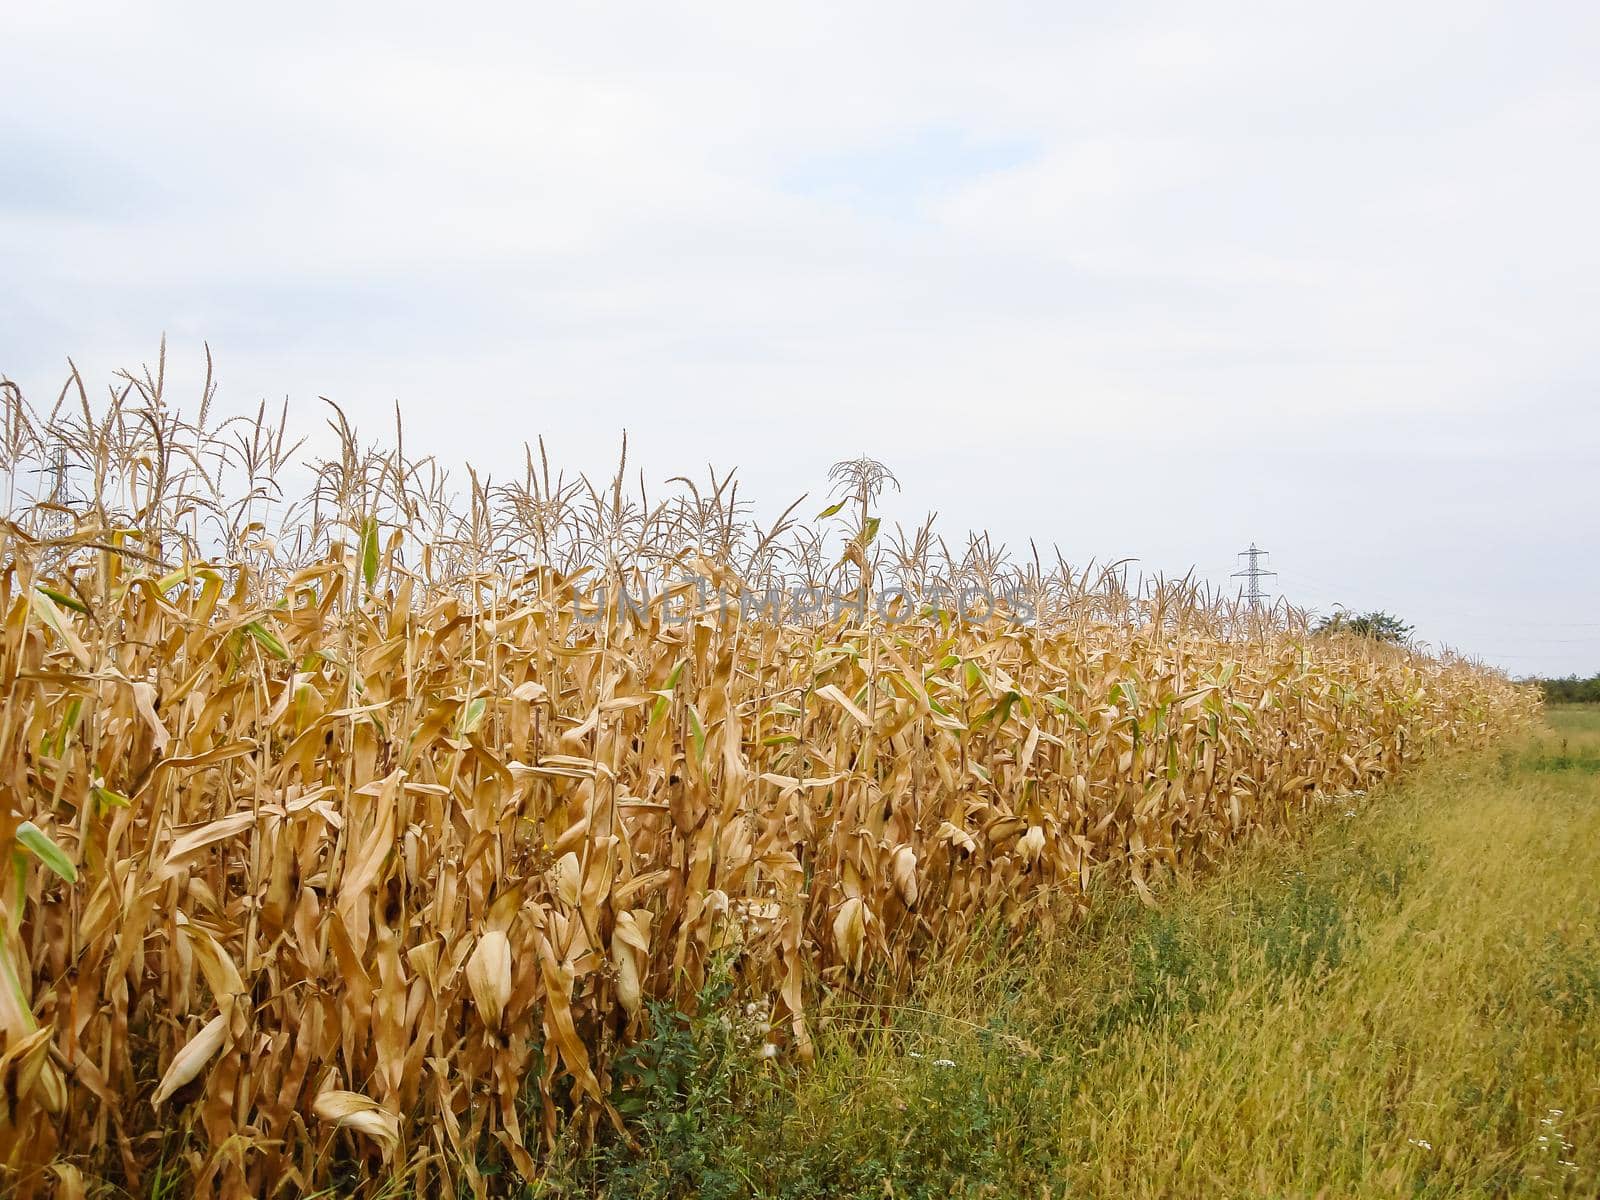 Dry corn field, dry corn stalks, end of season.